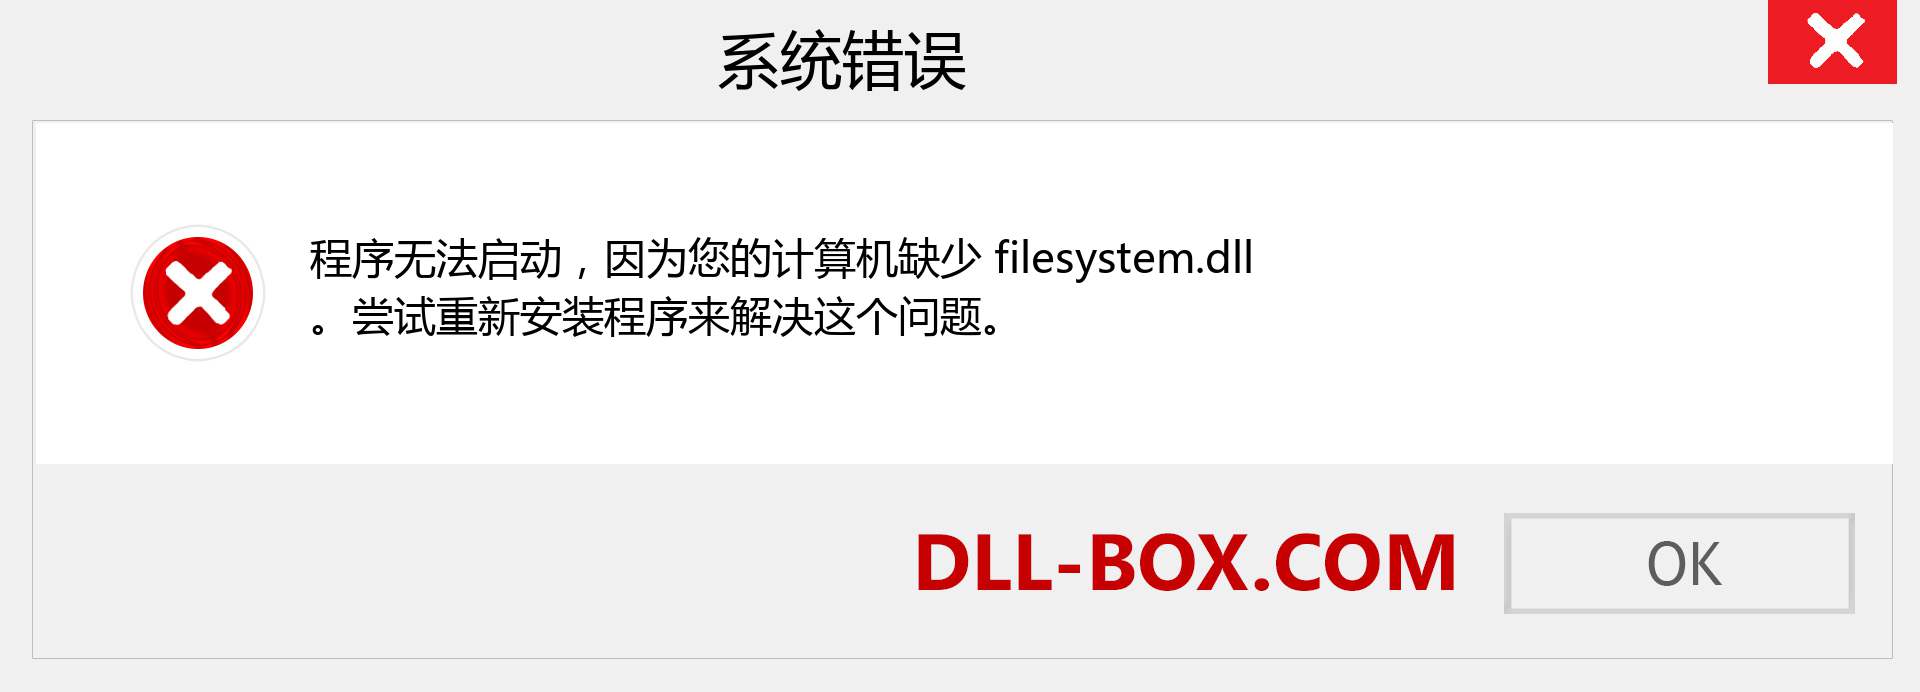 filesystem.dll 文件丢失？。 适用于 Windows 7、8、10 的下载 - 修复 Windows、照片、图像上的 filesystem dll 丢失错误